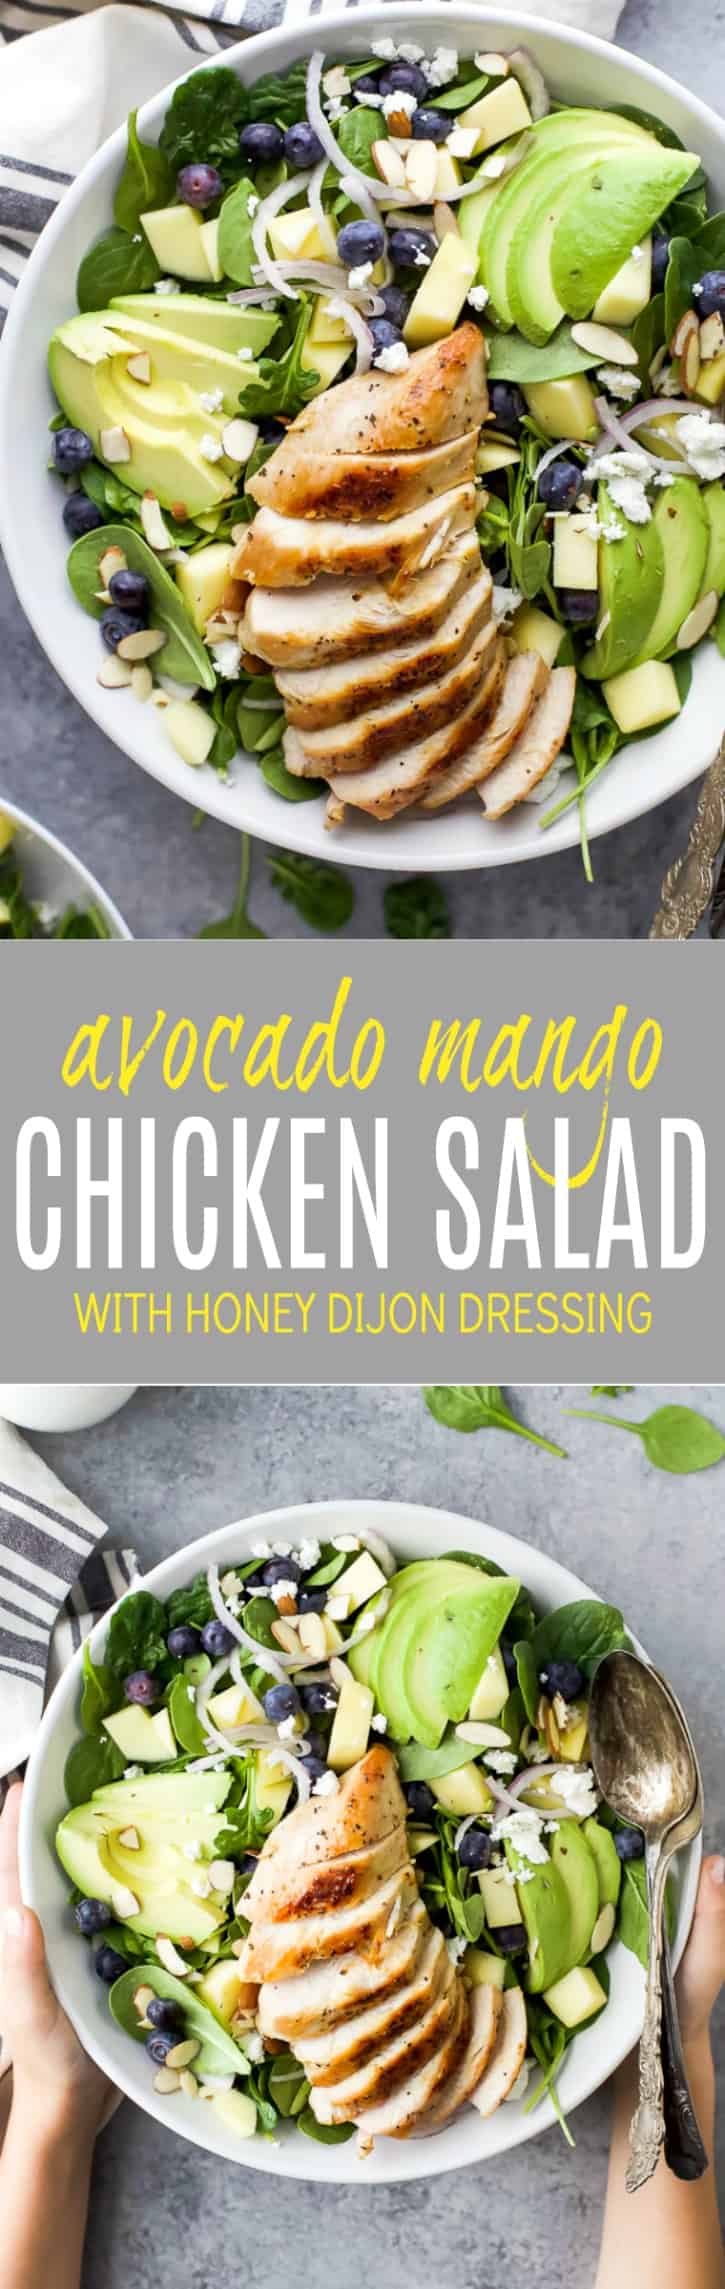 Pinterest image for Avocado Mango Chicken Salad with Honey Dijon Dressing